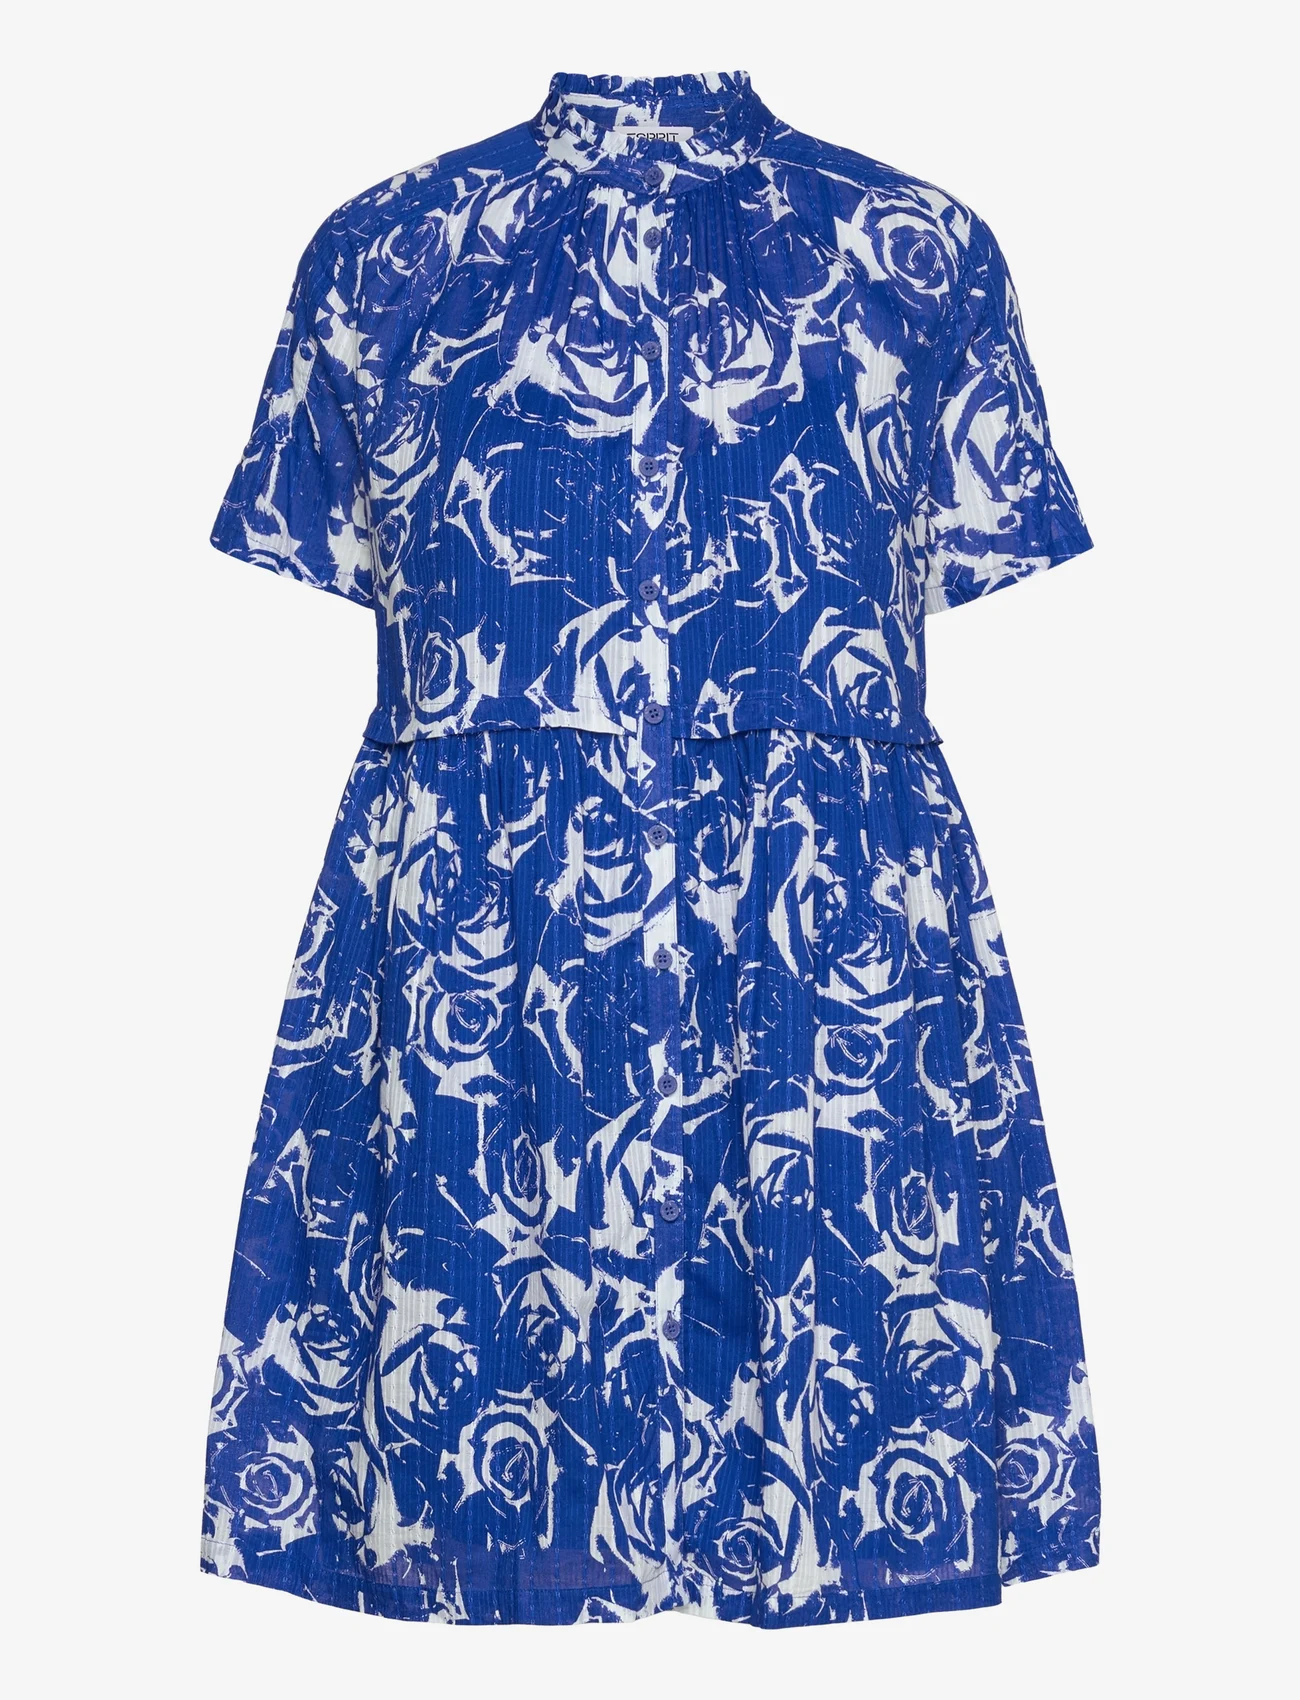 Esprit Casual - Dresses light woven - sukienki koszulowe - bright blue 2 - 0